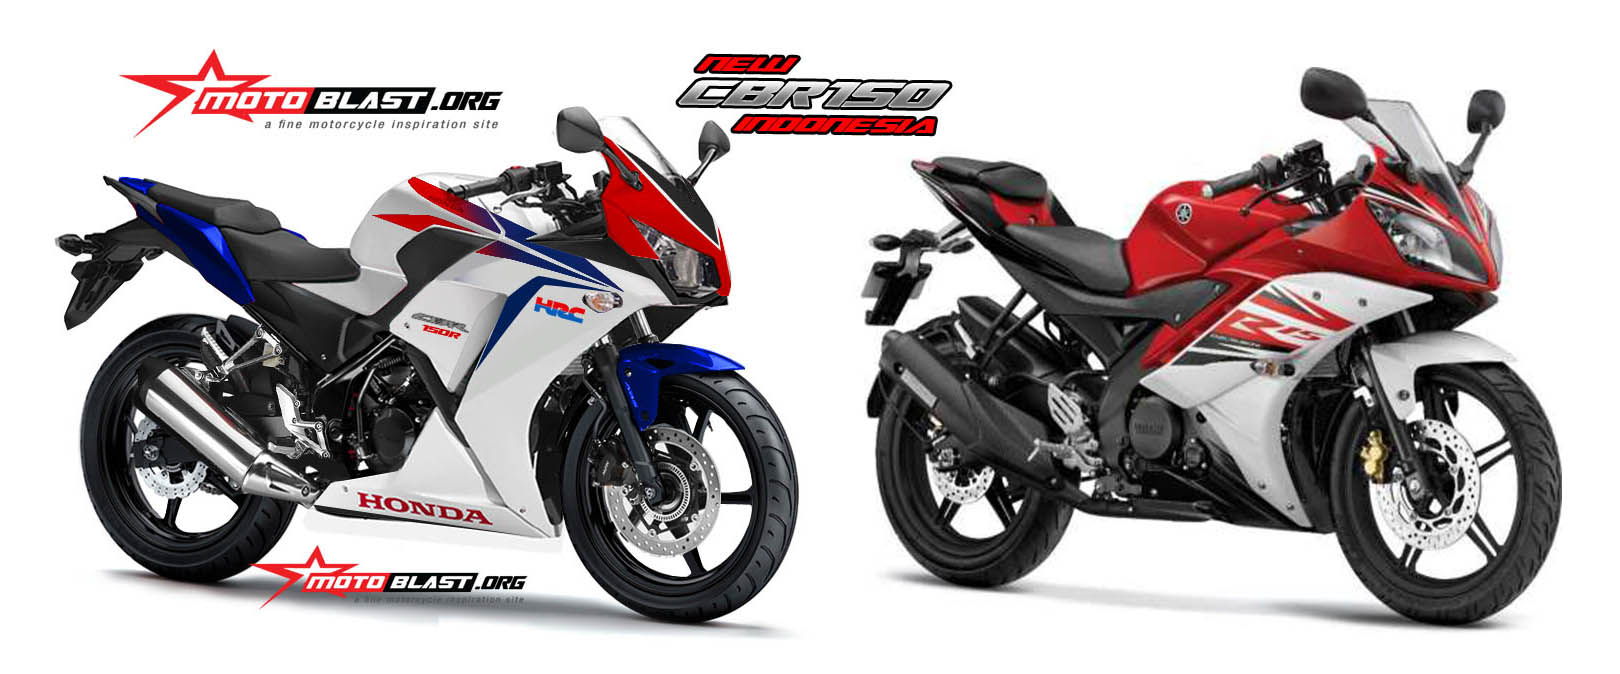 Perbandingan Yamaha R15 Vs Honda Cbr150r Motor Sport | Share The .